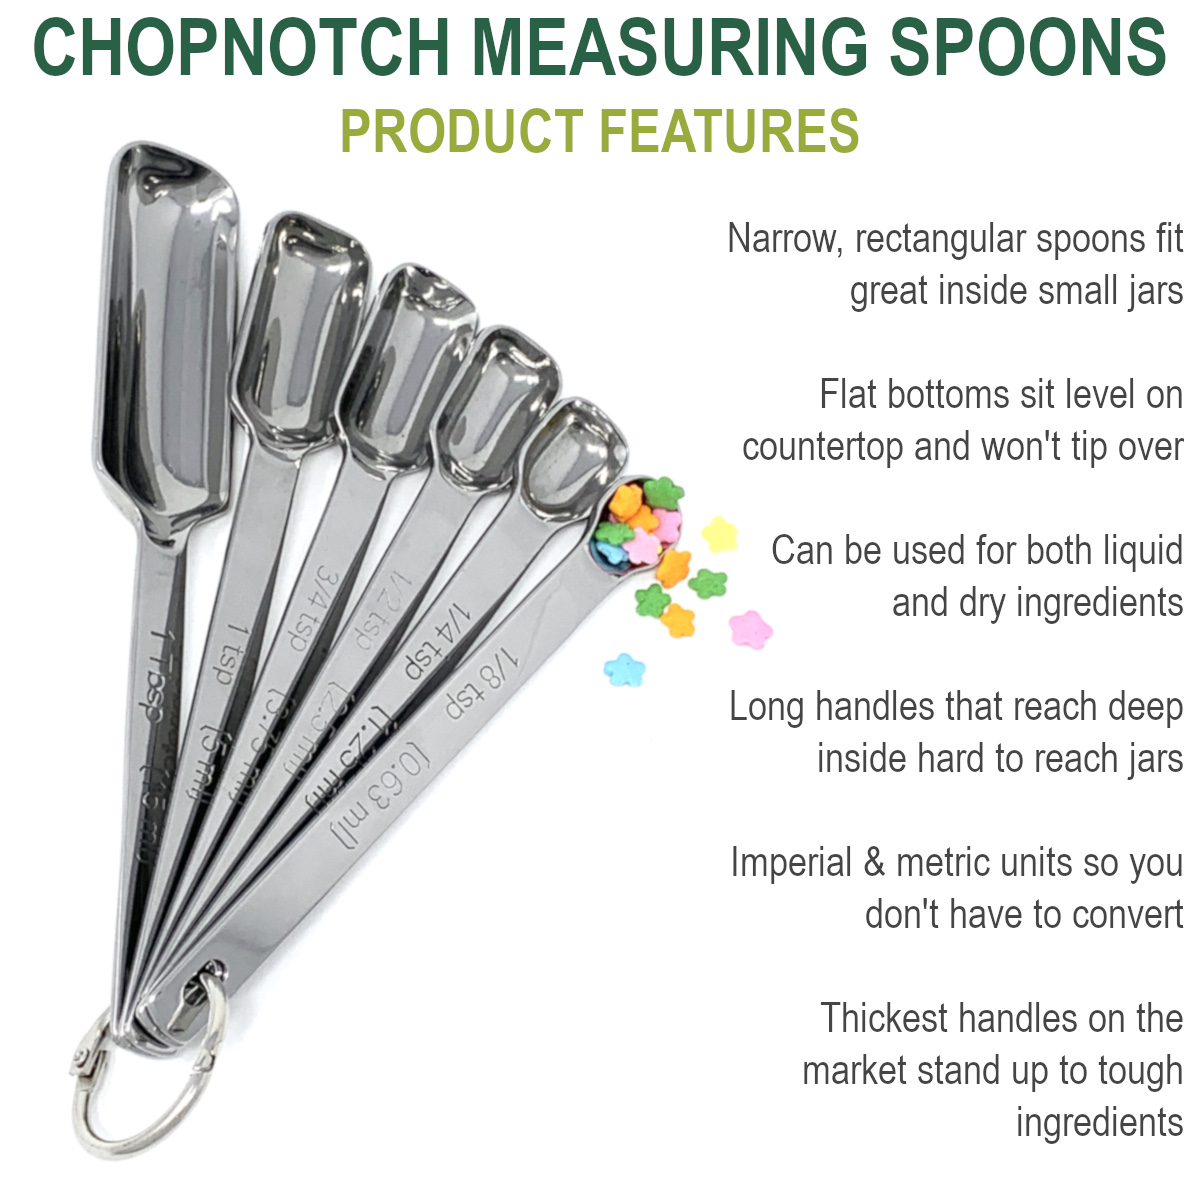 https://chopnotch.com/wp-content/uploads/Chopnotch-Measuring-Spoons.jpg